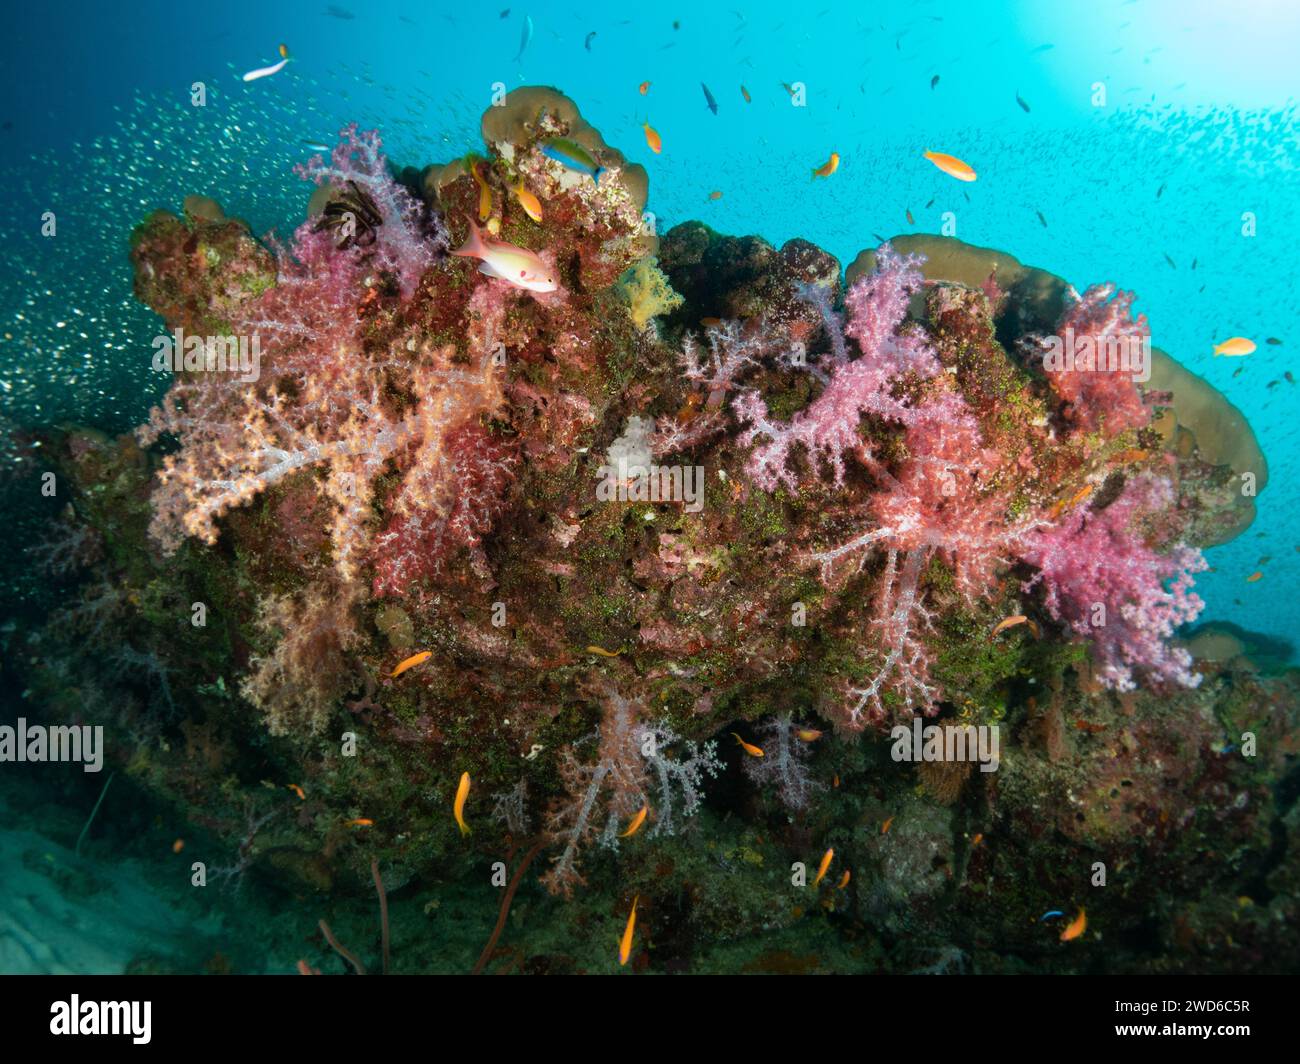 Dendronephthya haemprichi. Wirbellose Meerestiere. Blumige Rosa Rote Korallen Alcyonacea Nephtheidae, Cnidaria Octocorals. Coral Reef Life Undersea. Stockfoto